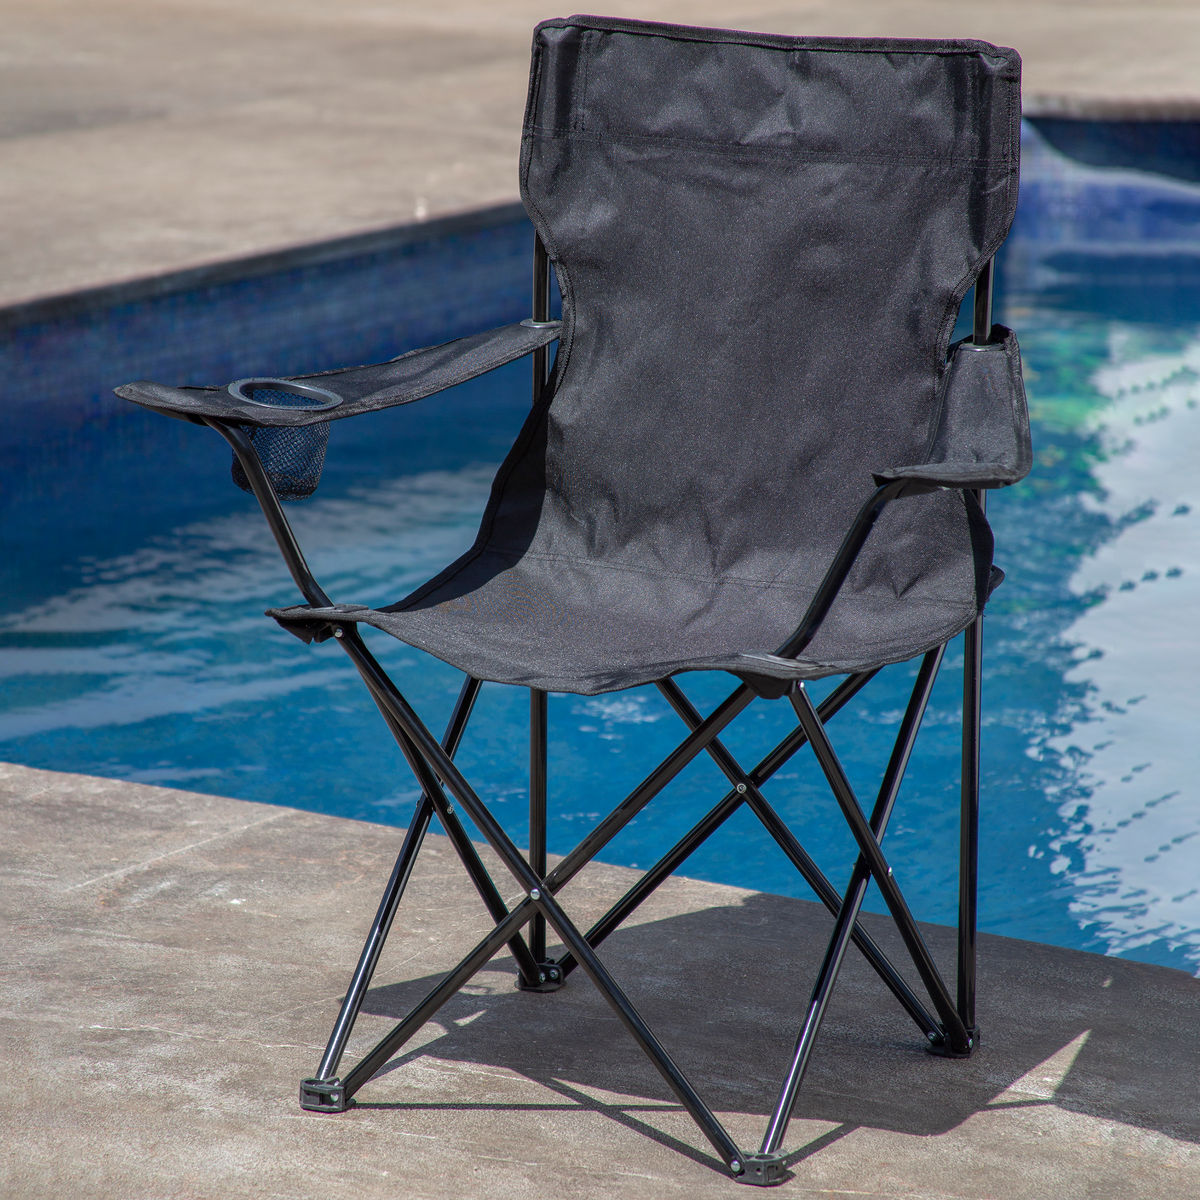 5 tipos de sillas plegables ideales para tener en casa – The Home Depot Blog